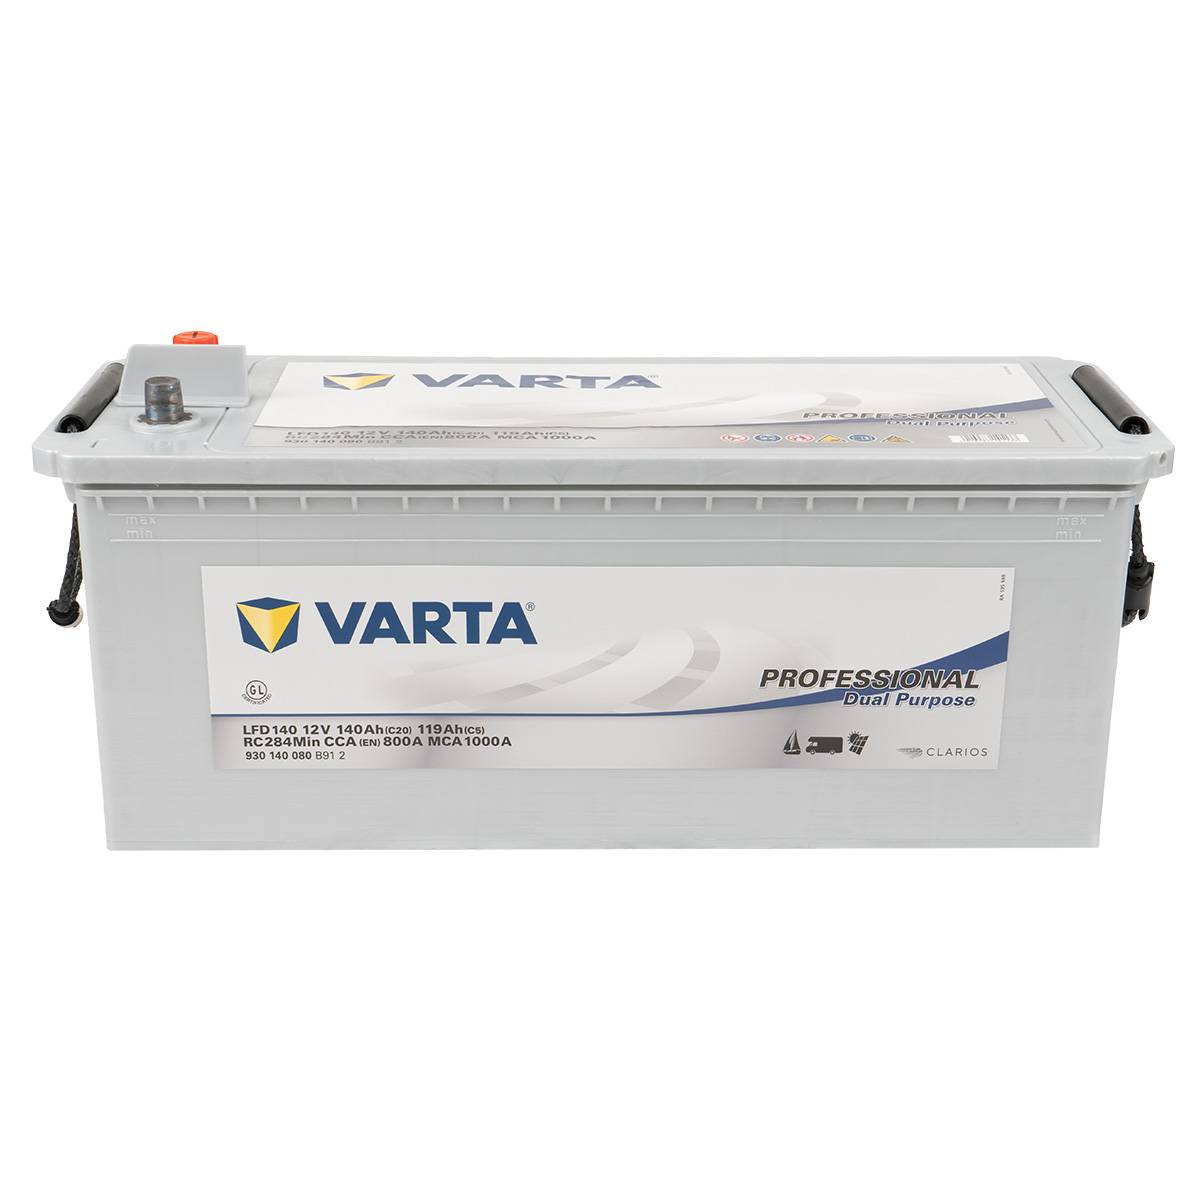 Varta LFD140 Professional Dual Purpose Versorgungsbatterie 12V 140Ah 800A